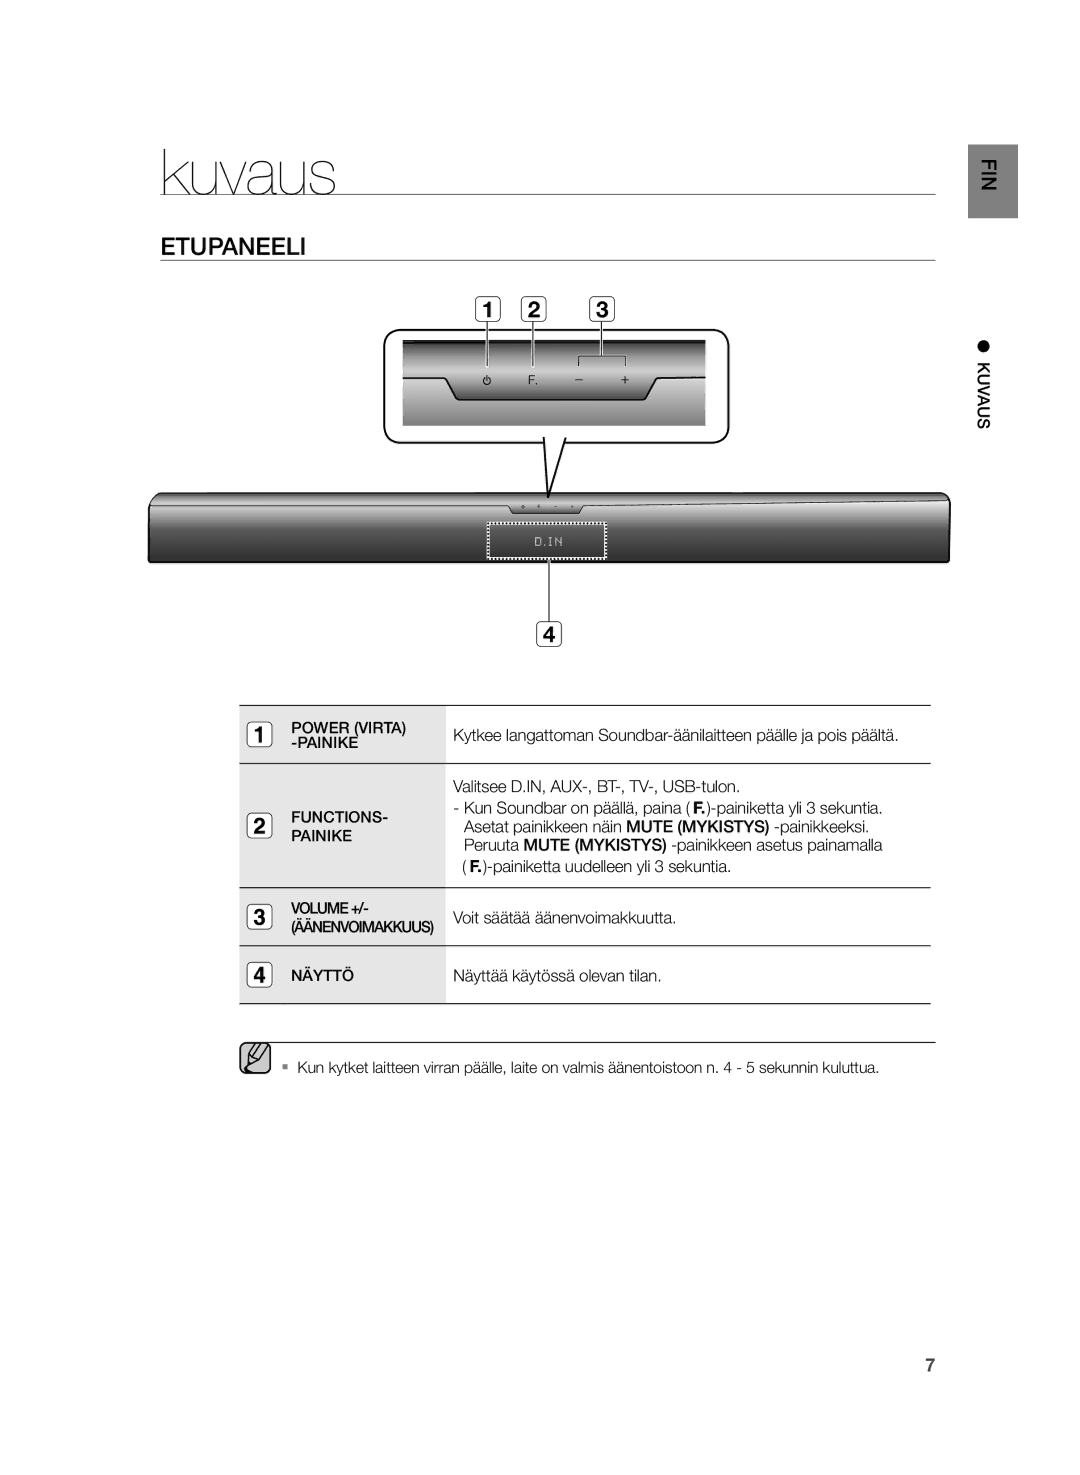 Samsung HW-H355/XE manual Kuvaus, Etupaneeli 